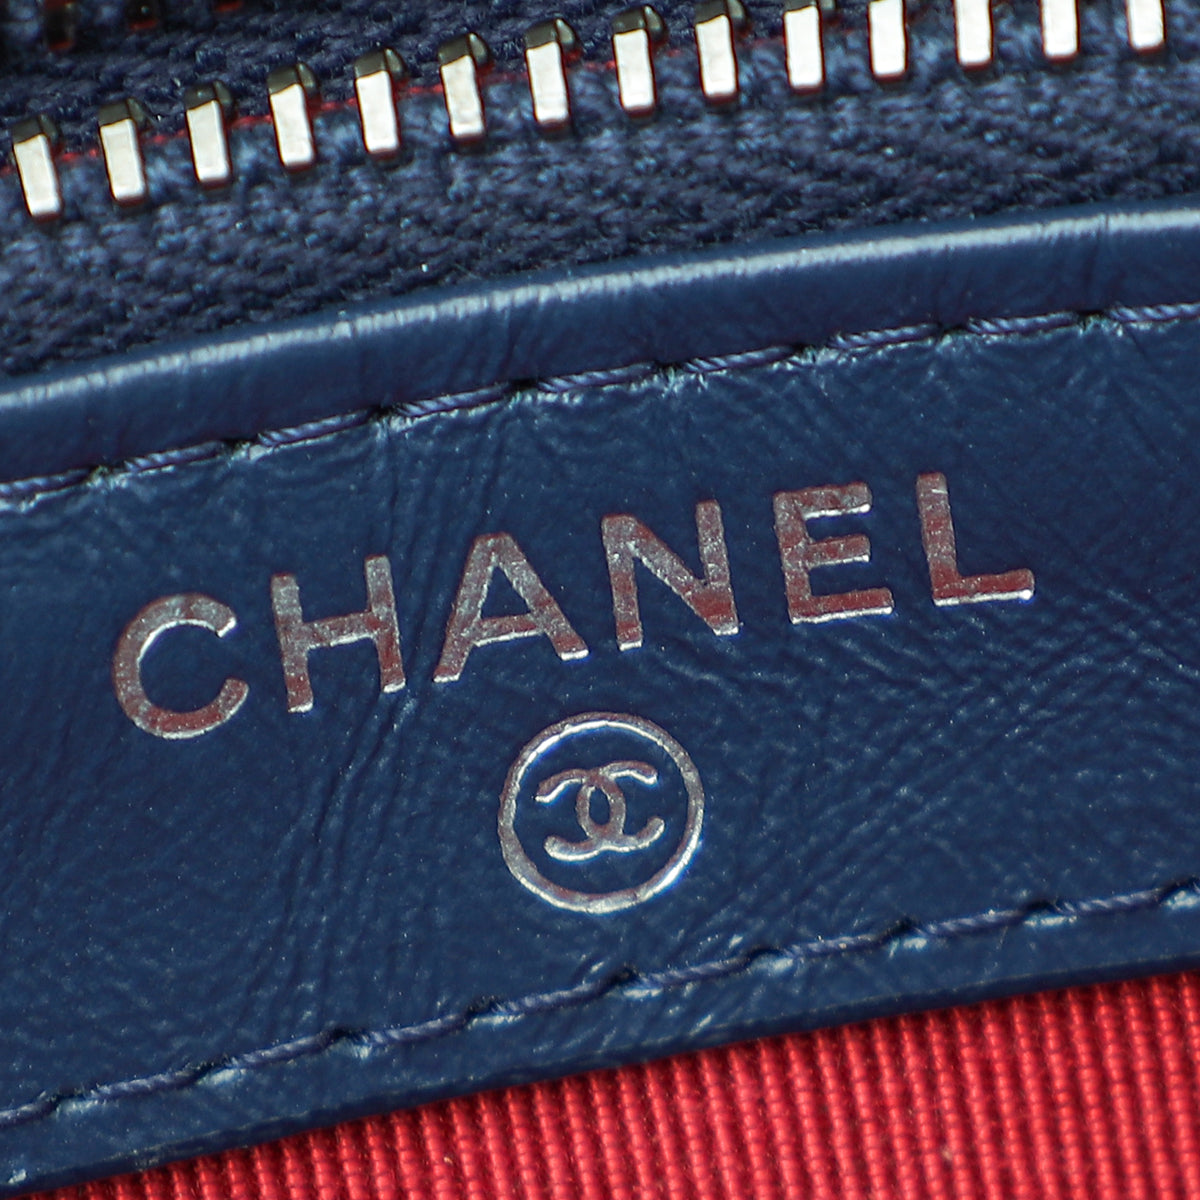 Chanel Blue Gabrielle Double Zip Chain Pouch